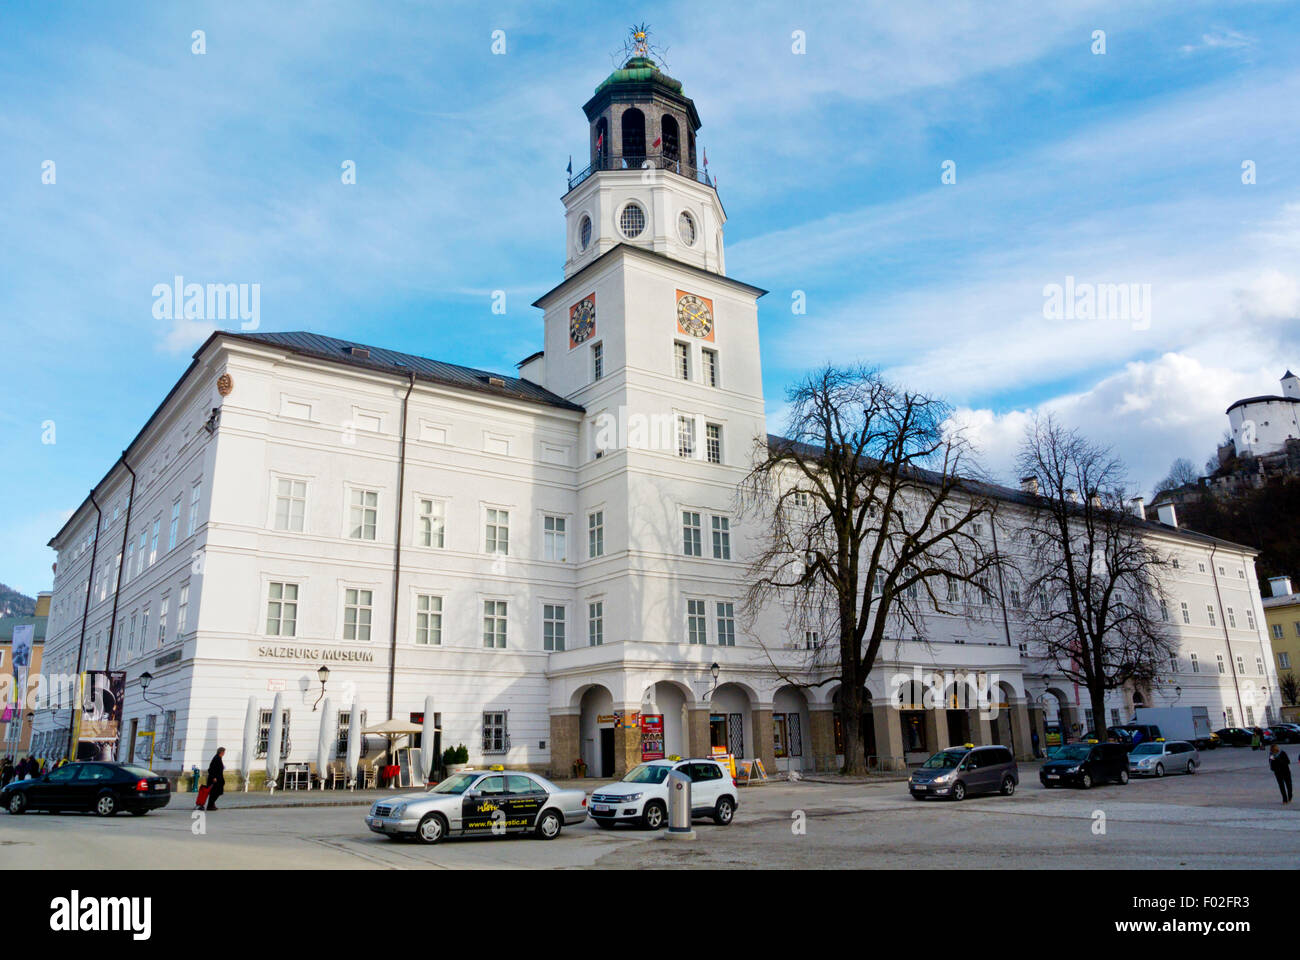 Neue Residenz, palace housing city museum, with Salzburger Glockenspiel, clock tower, Altstadt, old town, Salzburg, Austria Stock Photo